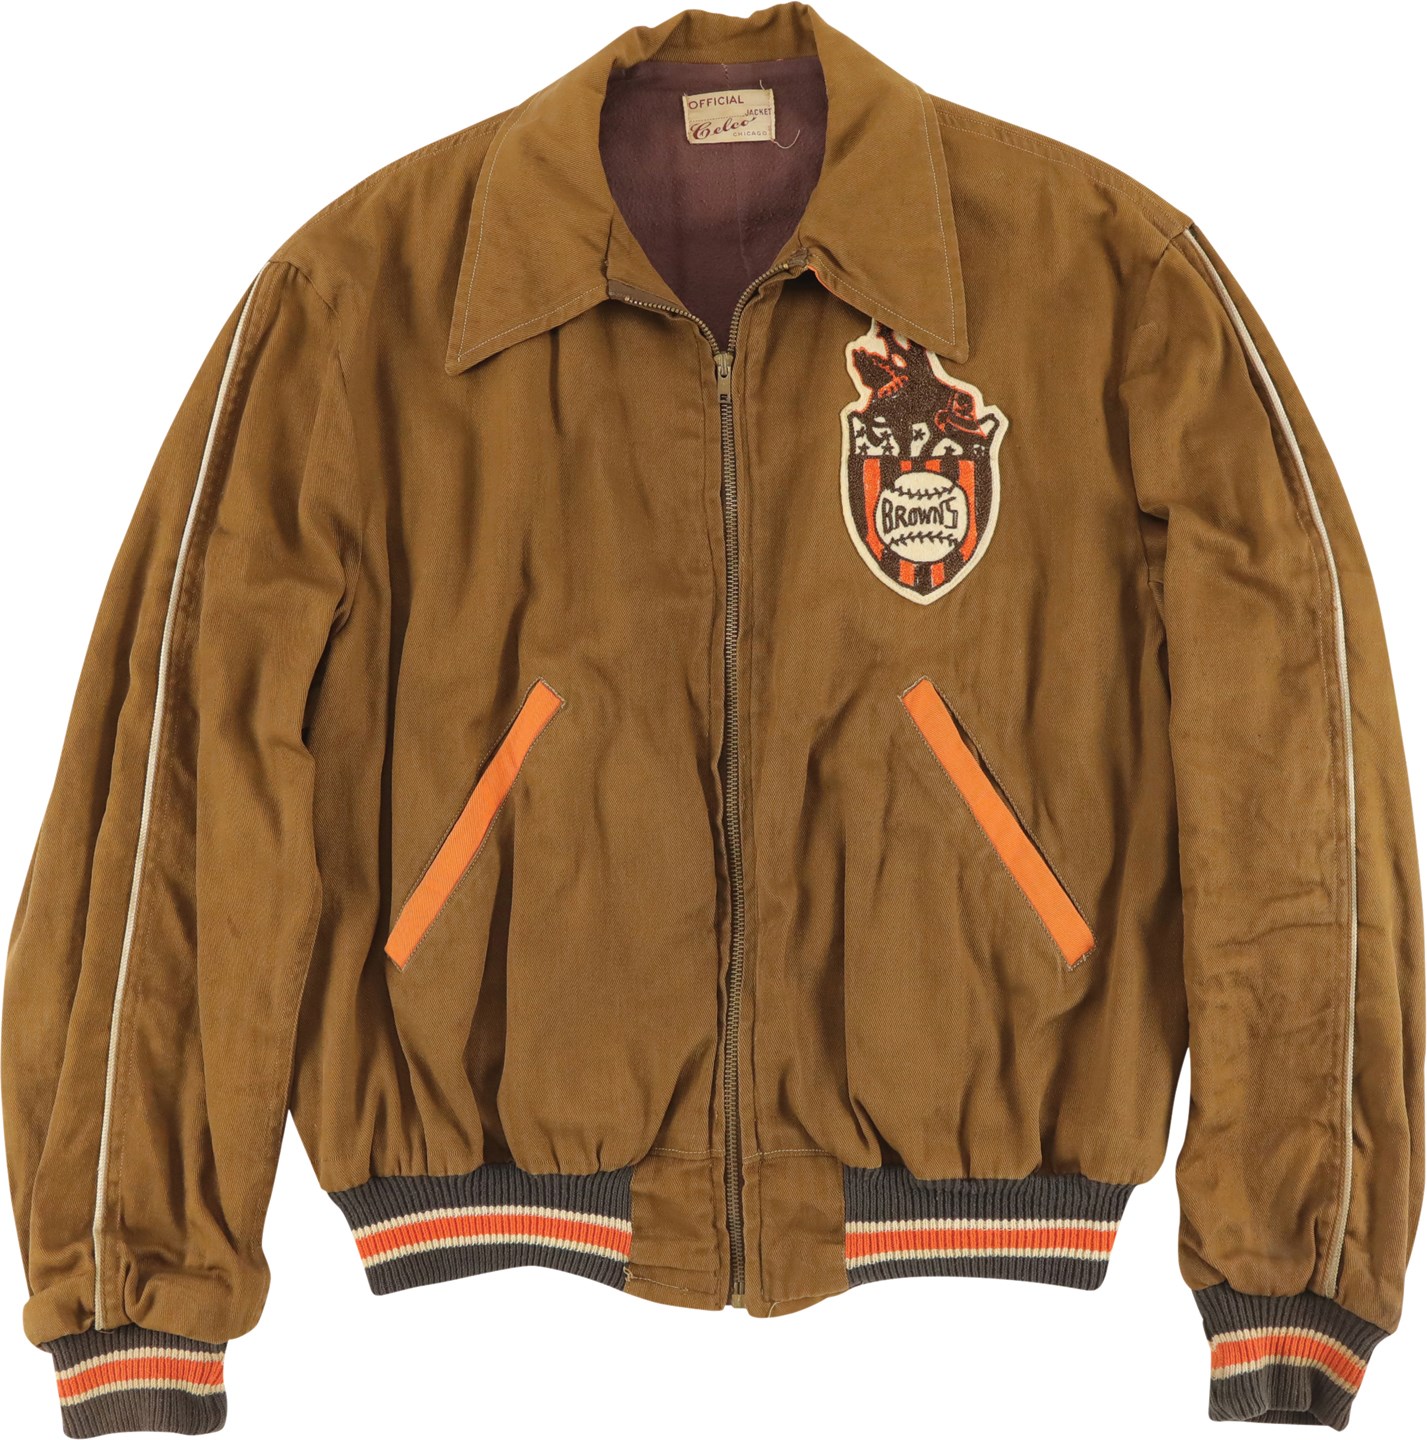 - Circa 1940s St. Louis Browns Team Jacket